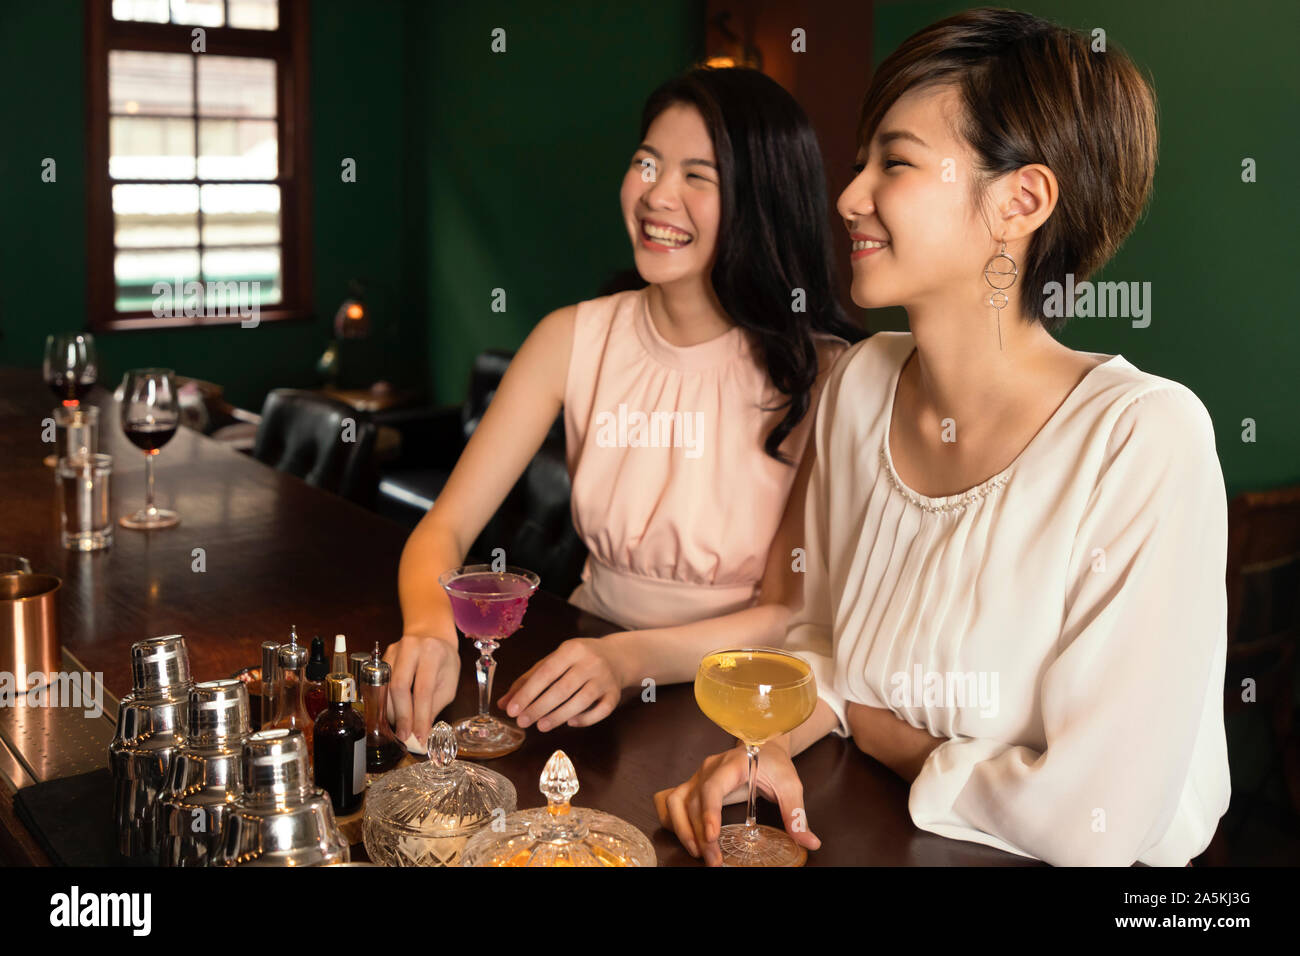 Deux smiling young women enjoying cocktails at bar Banque D'Images